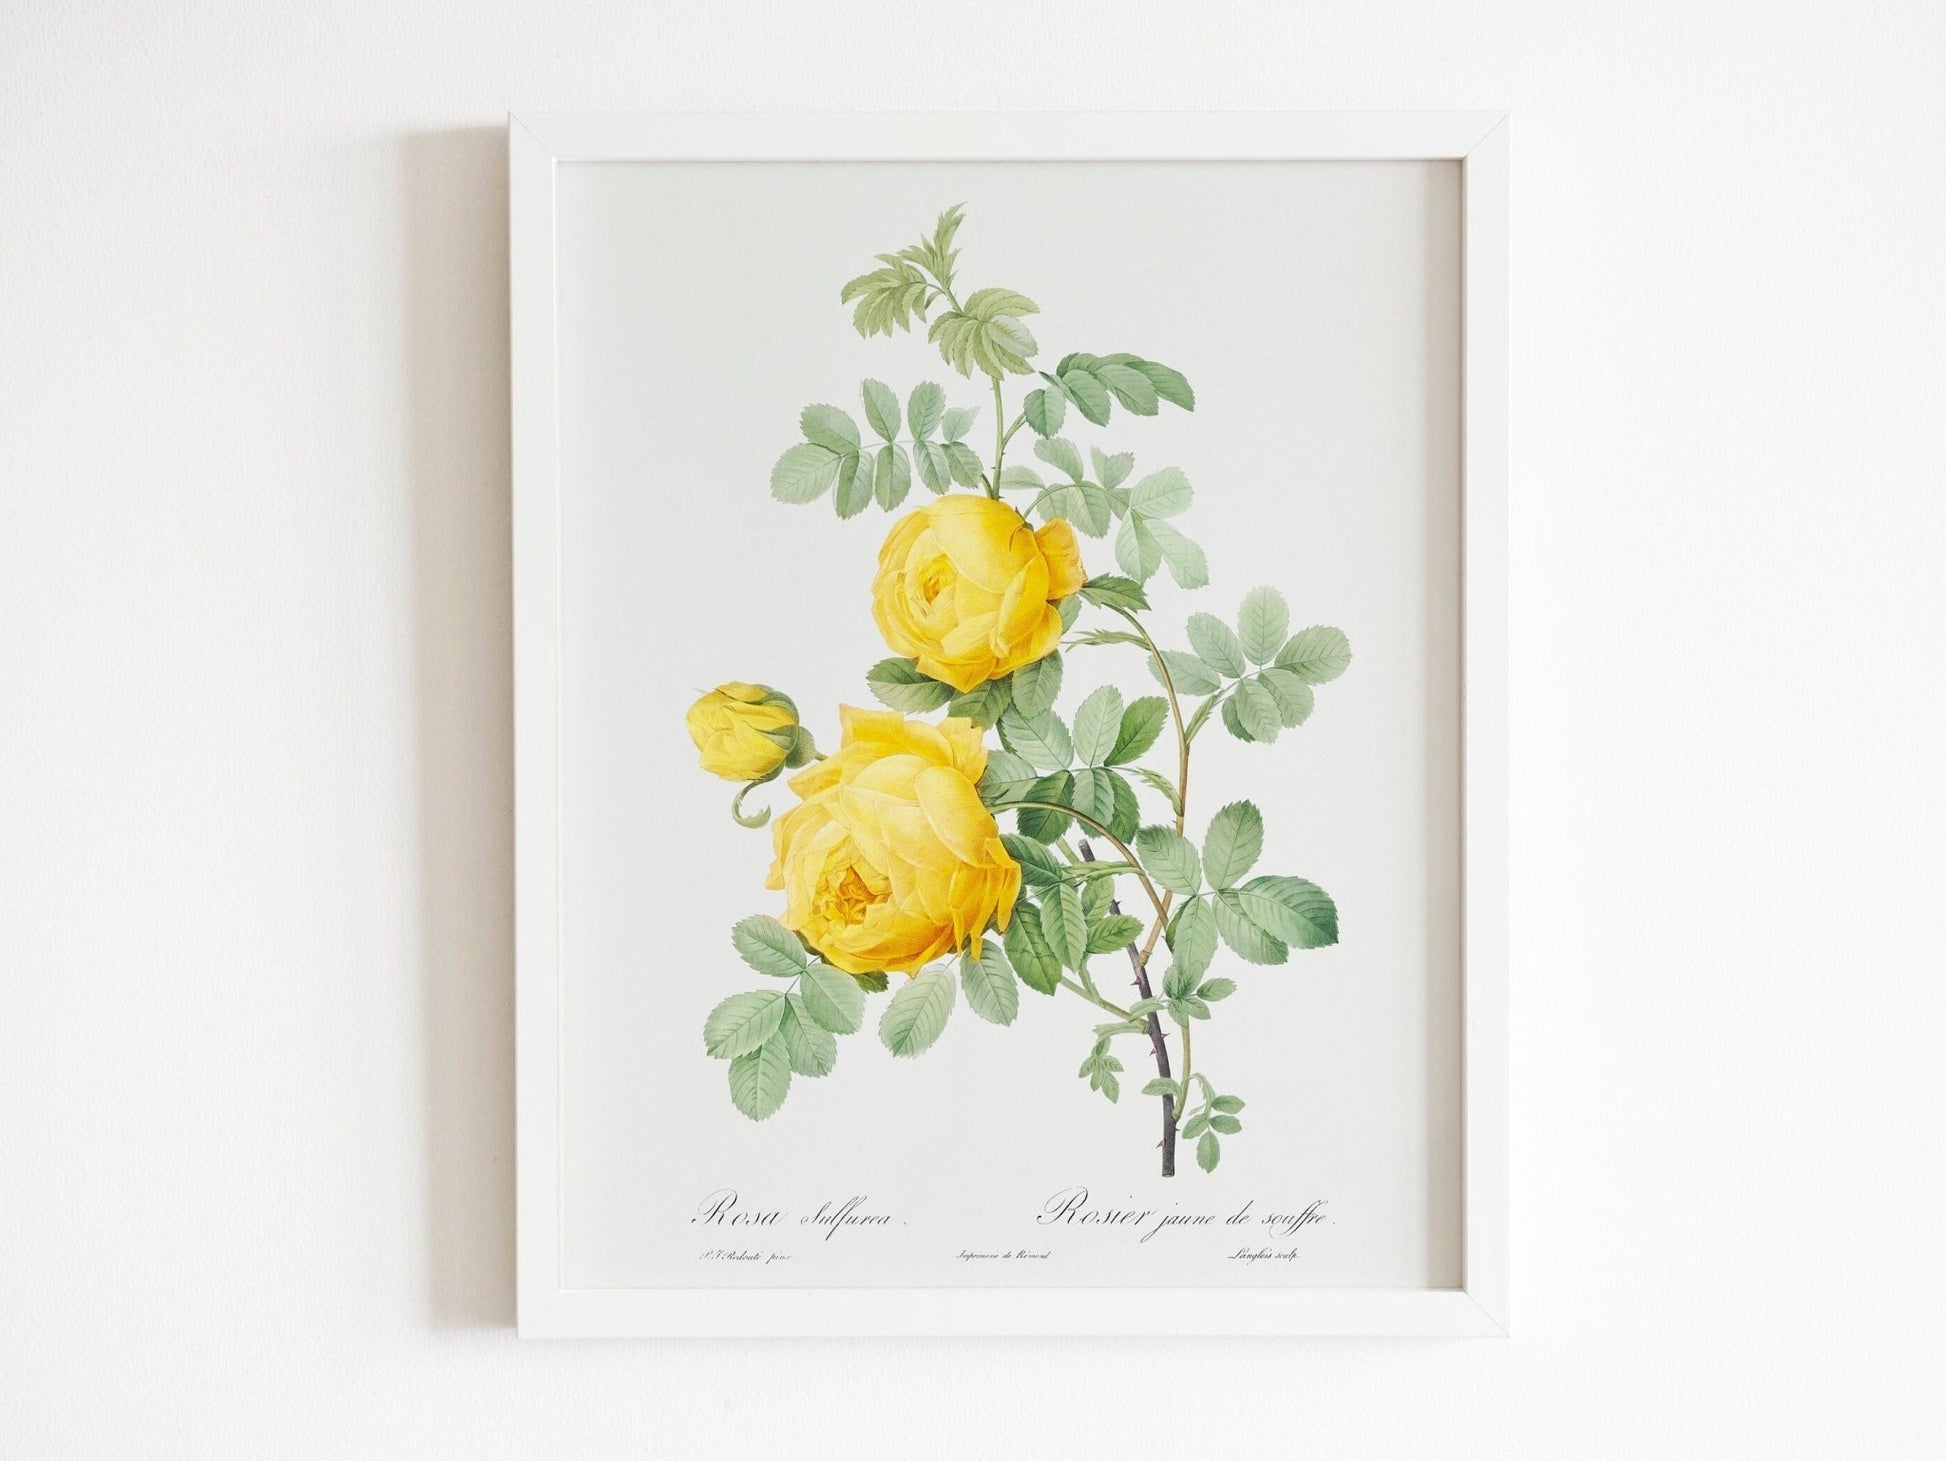 Set of 3 Lily & Roses Prints by Pierre - Joseph Redouté (Raphael of Flowers) - Pathos Studio - Art Print Sets